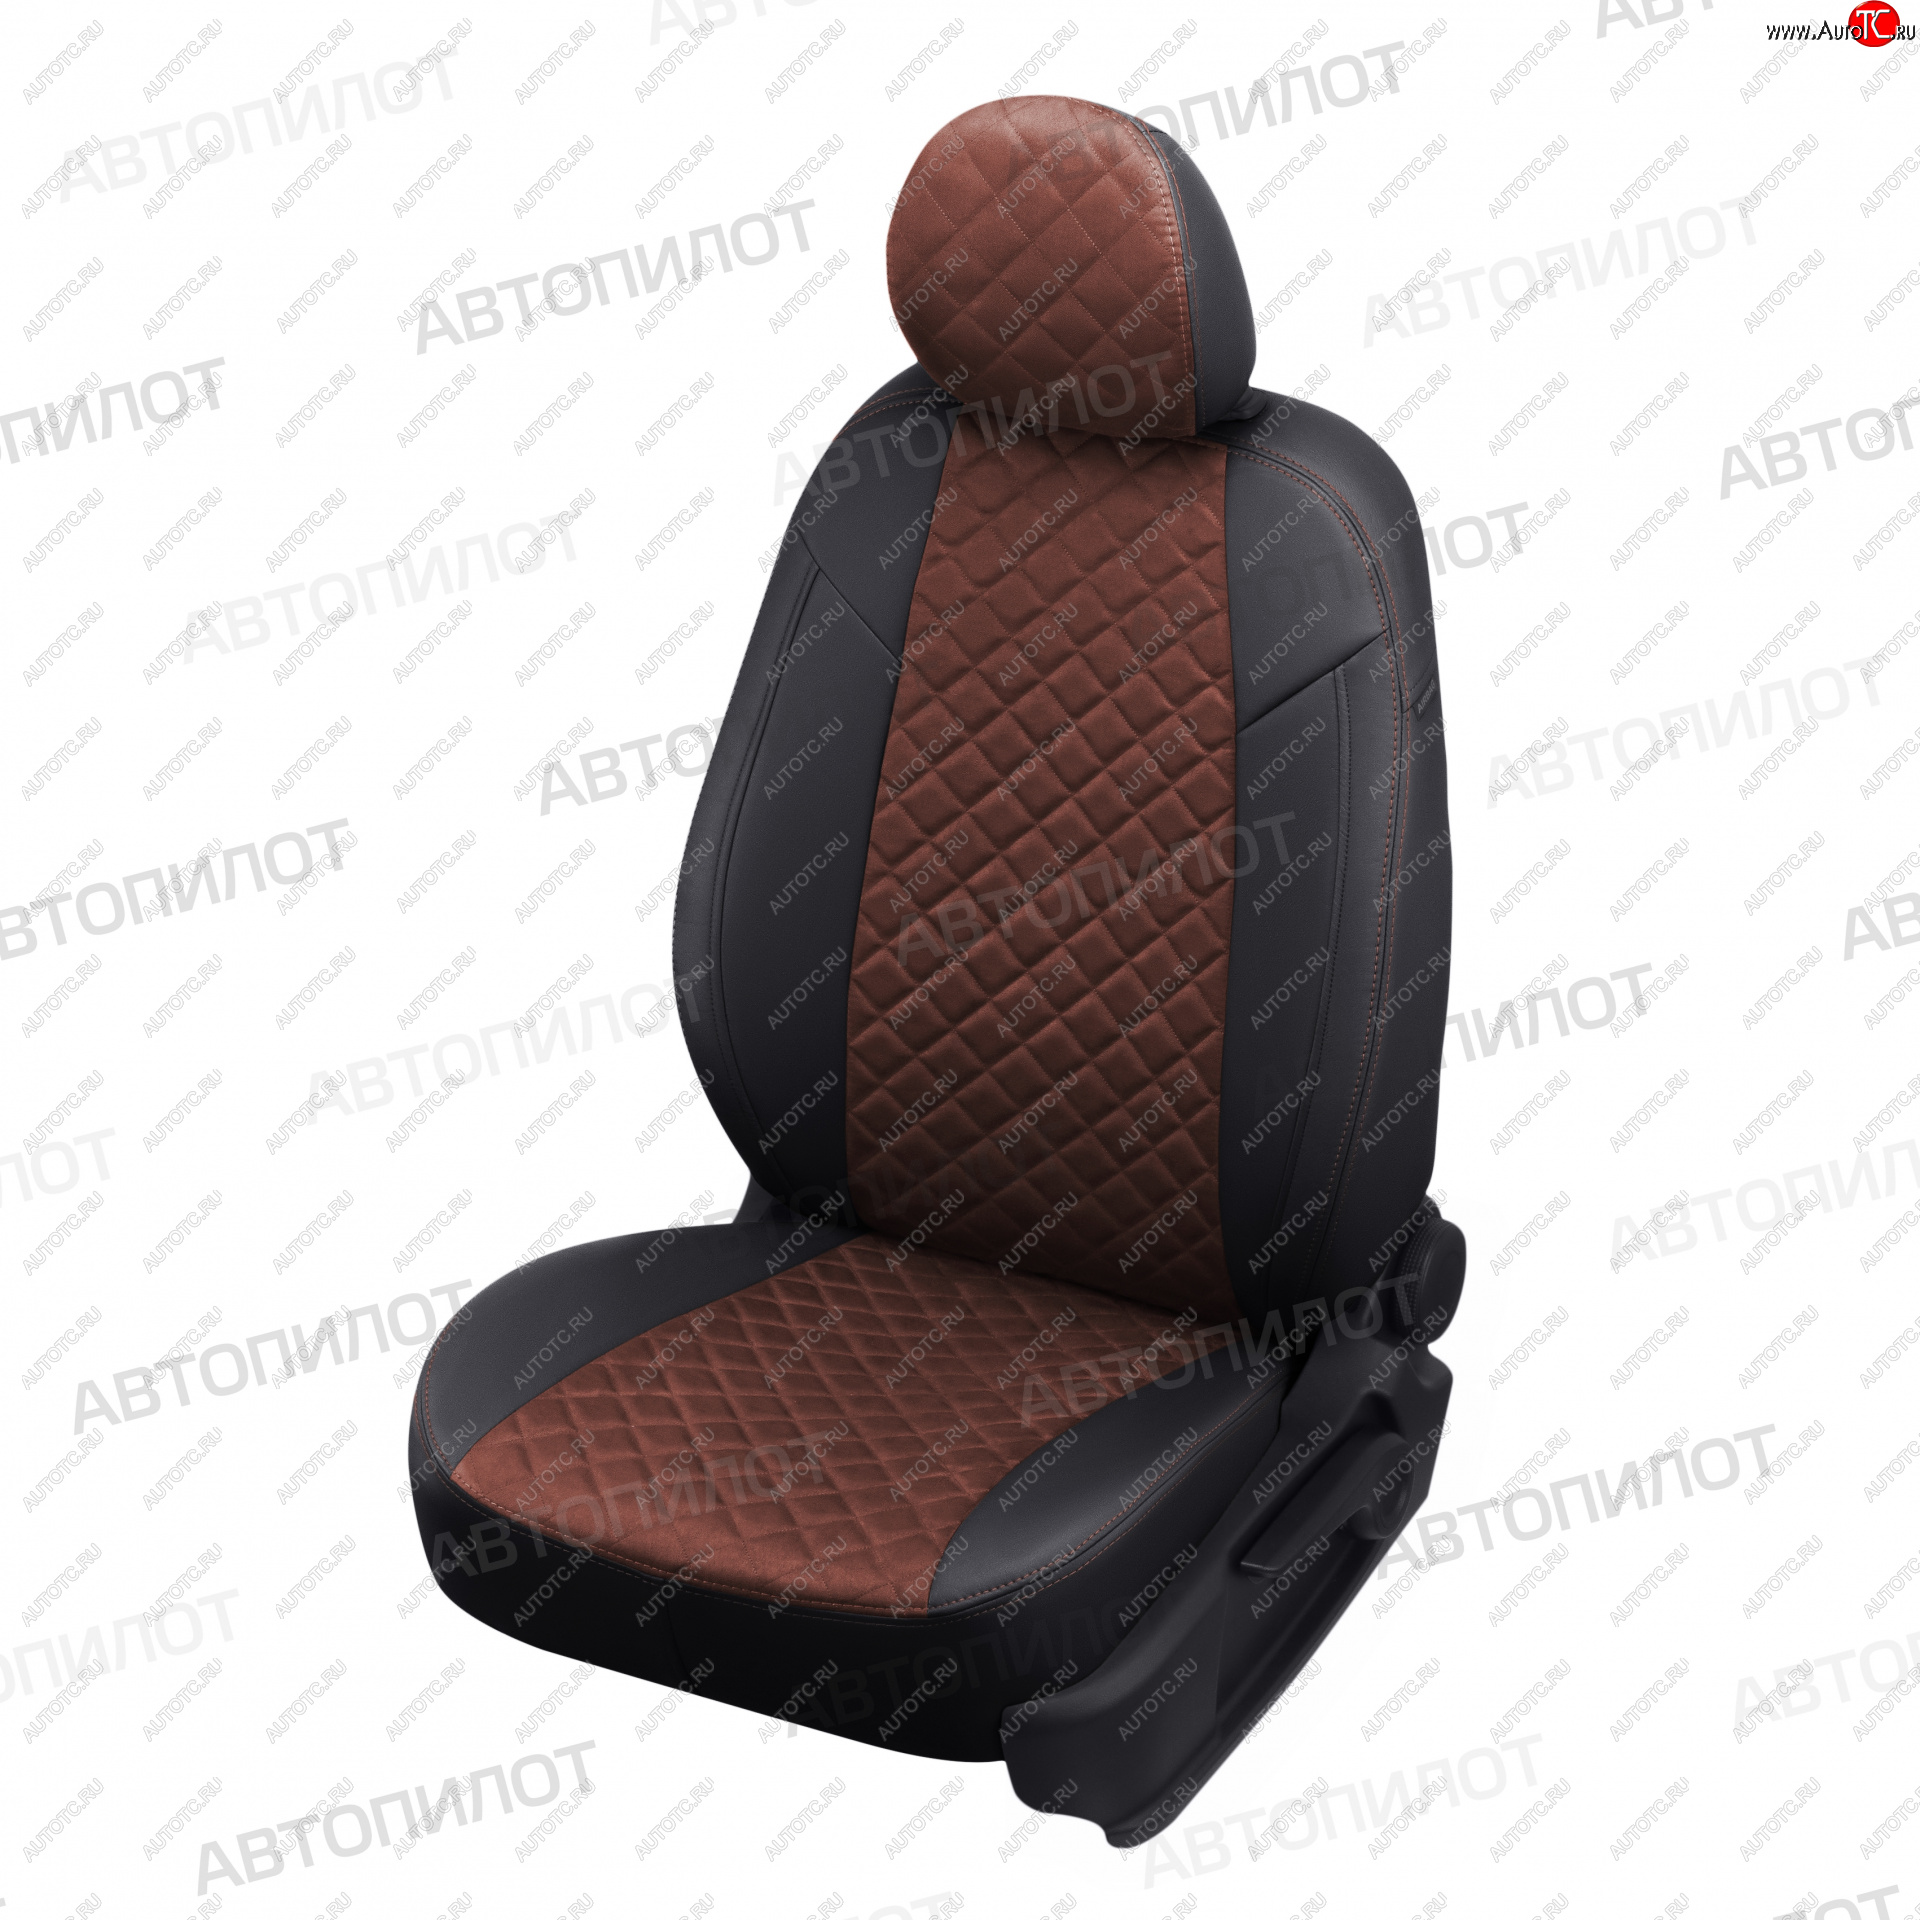 7 599 р. Чехлы сидений (экокожа/алькантара, Classic) Автопилот Ромб  KIA Cerato  3 YD (2013-2019) (черный/шоколад)